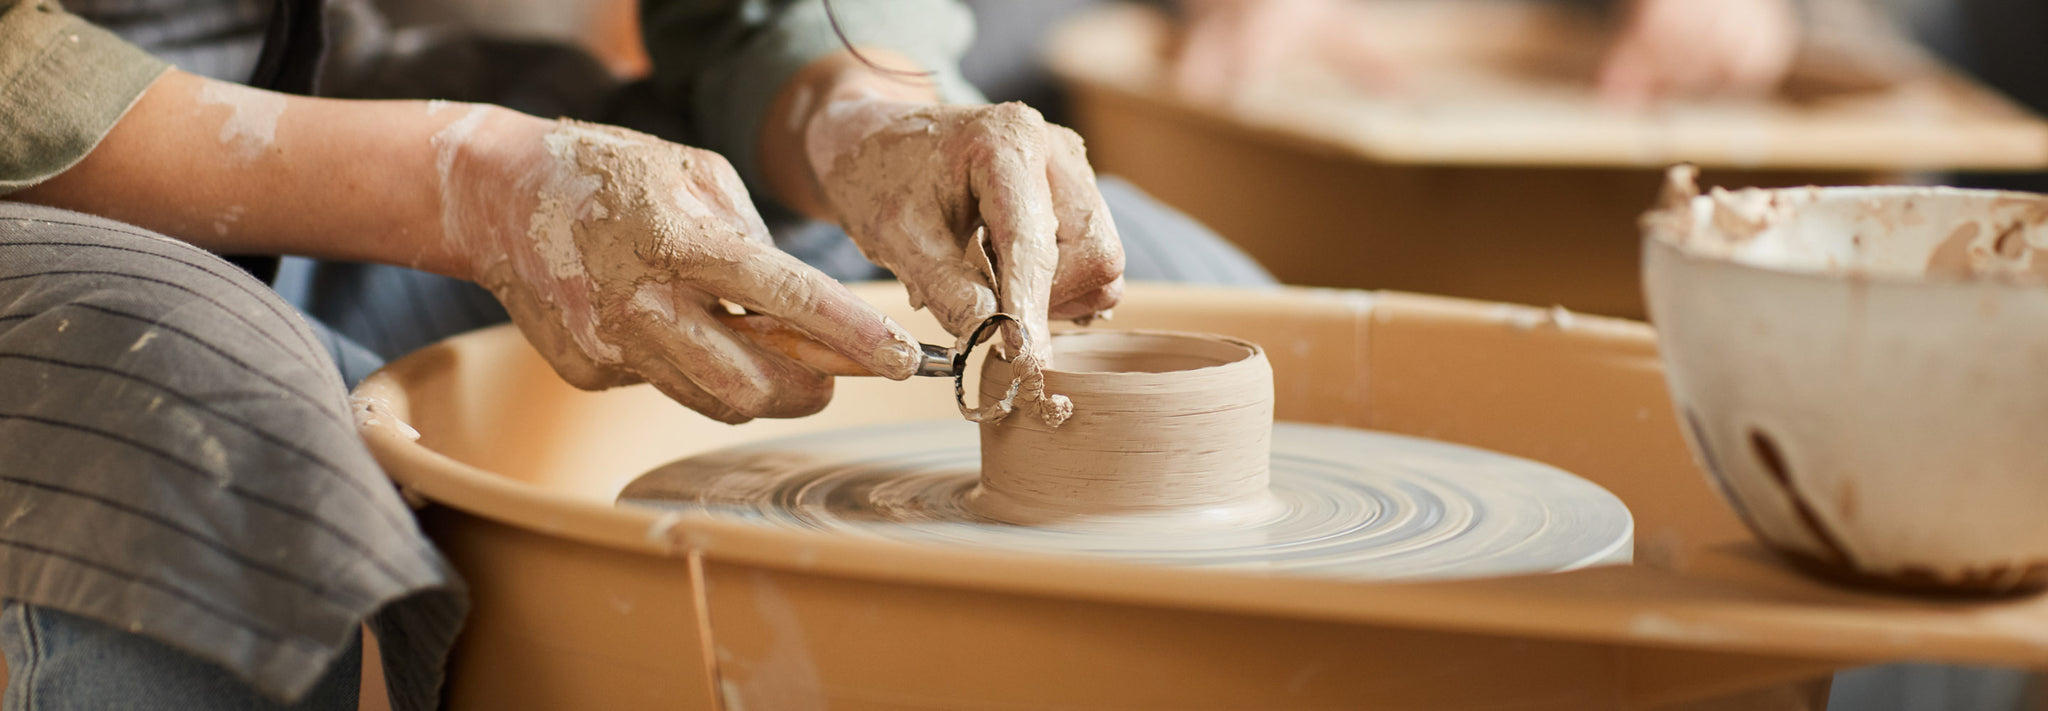 Beginning Pottery Class in Los Angeles, Echo Art Studio.